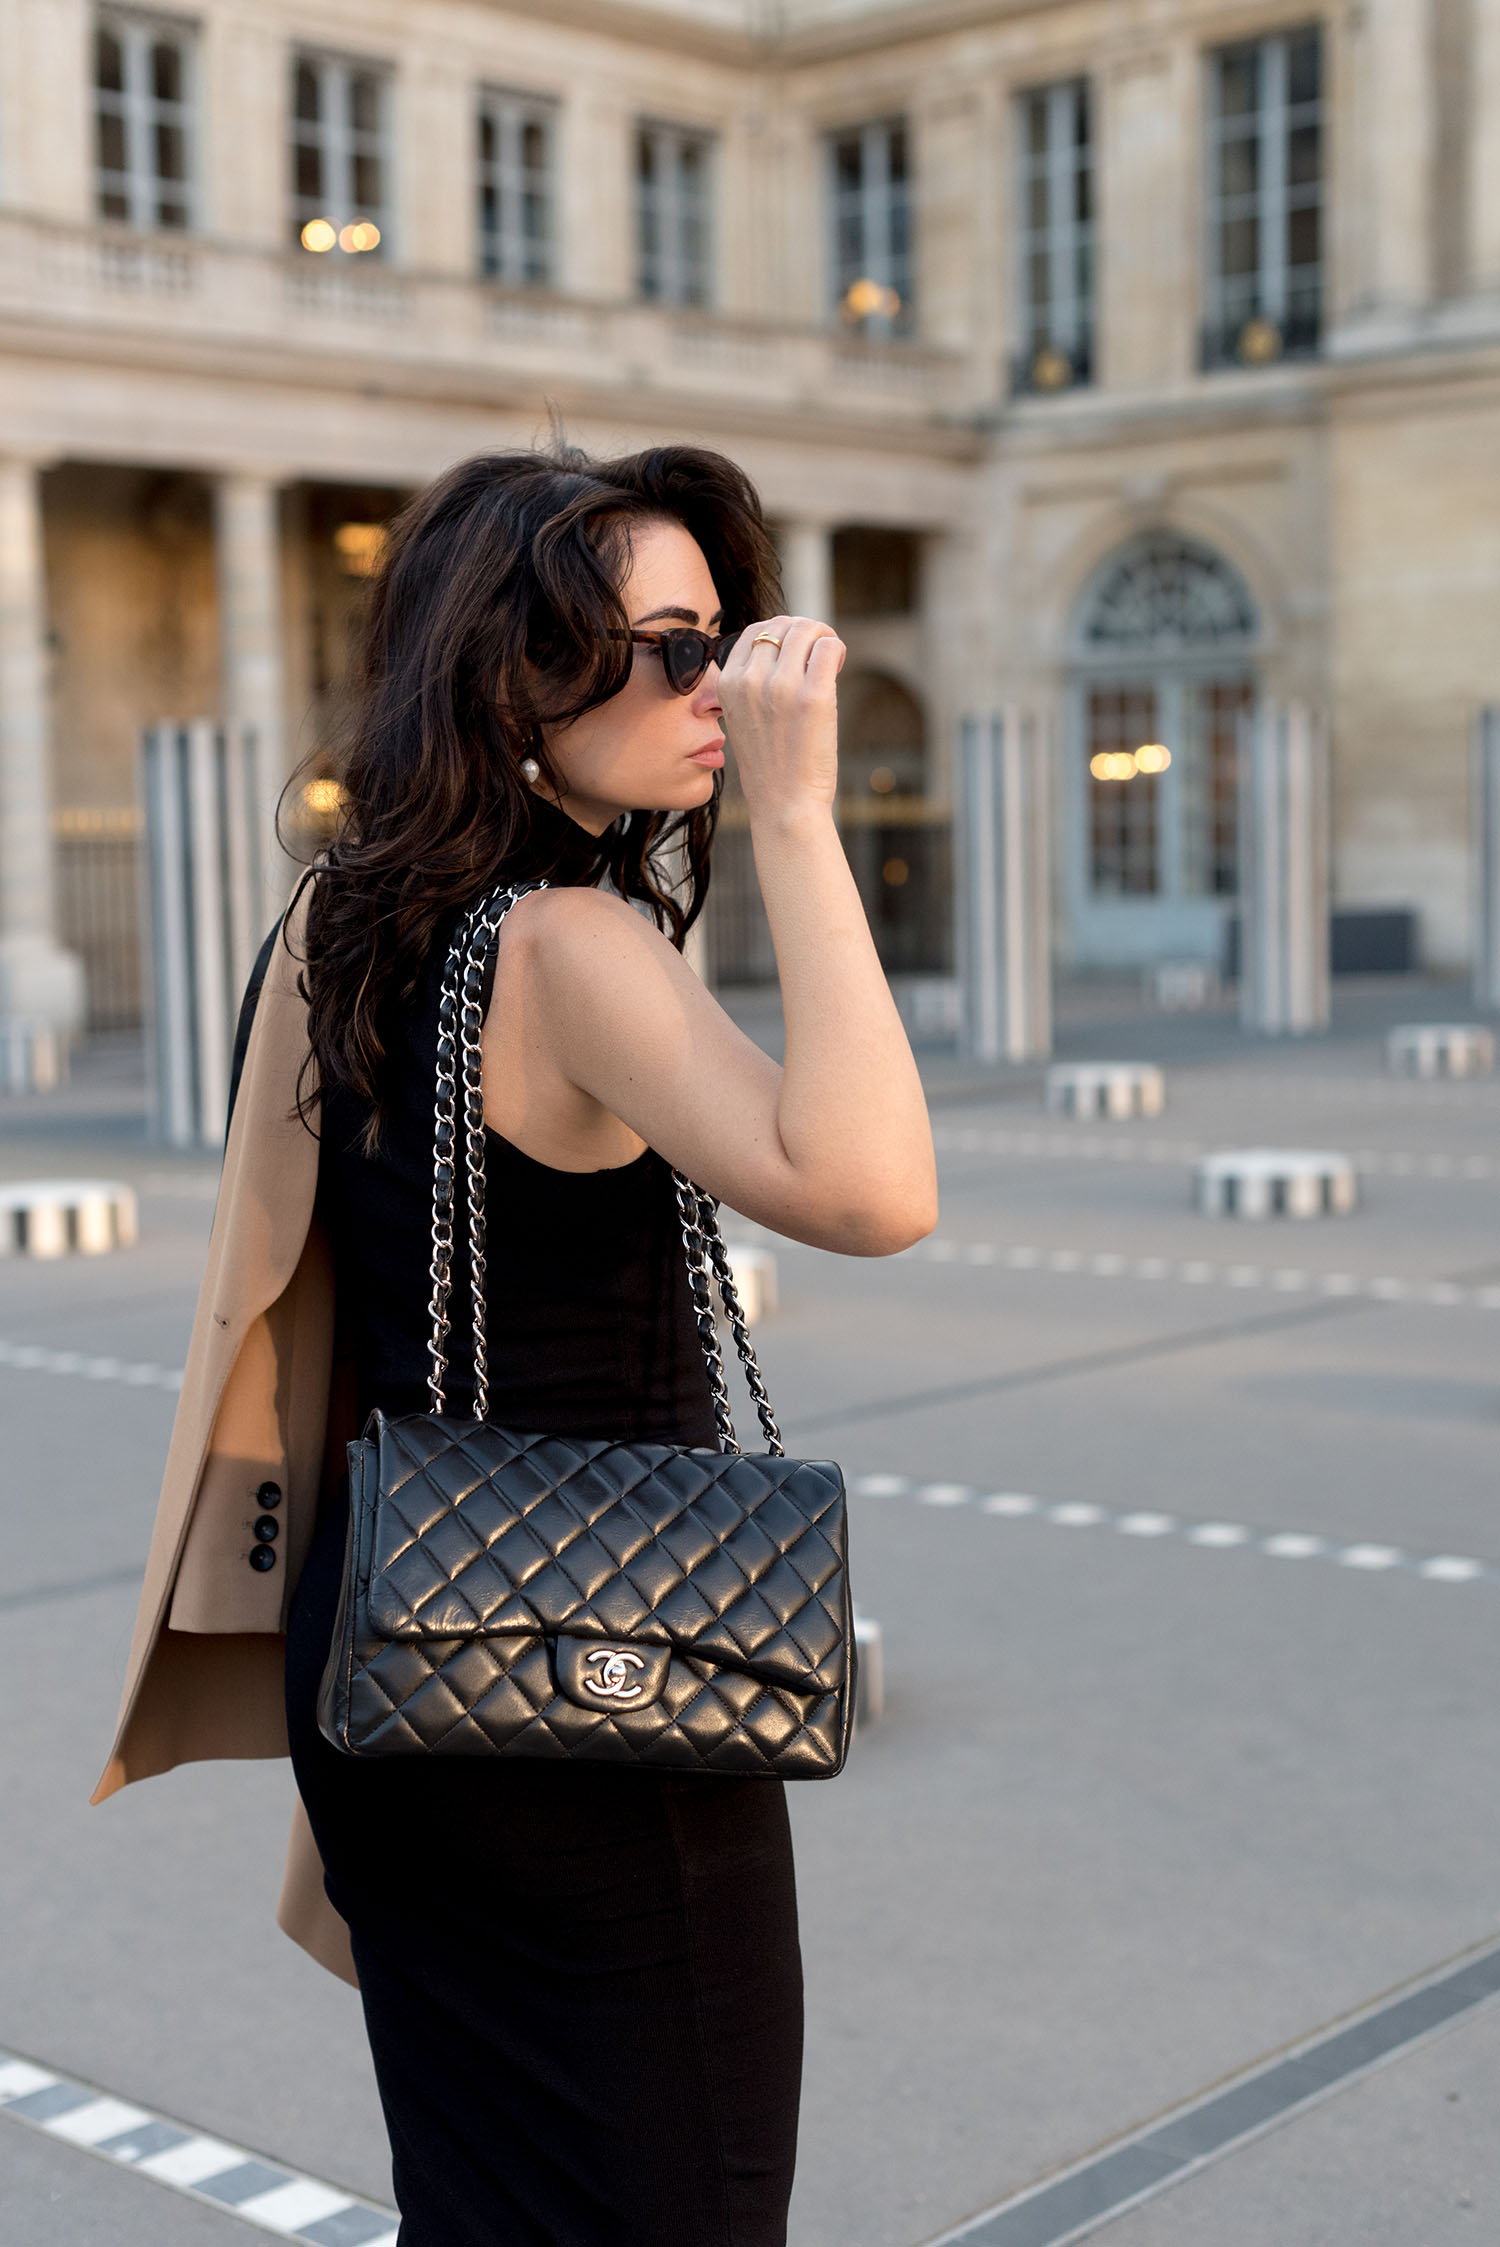 Coco & Vera - Chanel jumbo quilted handbag, Zara sunglasses, Zara body con dress